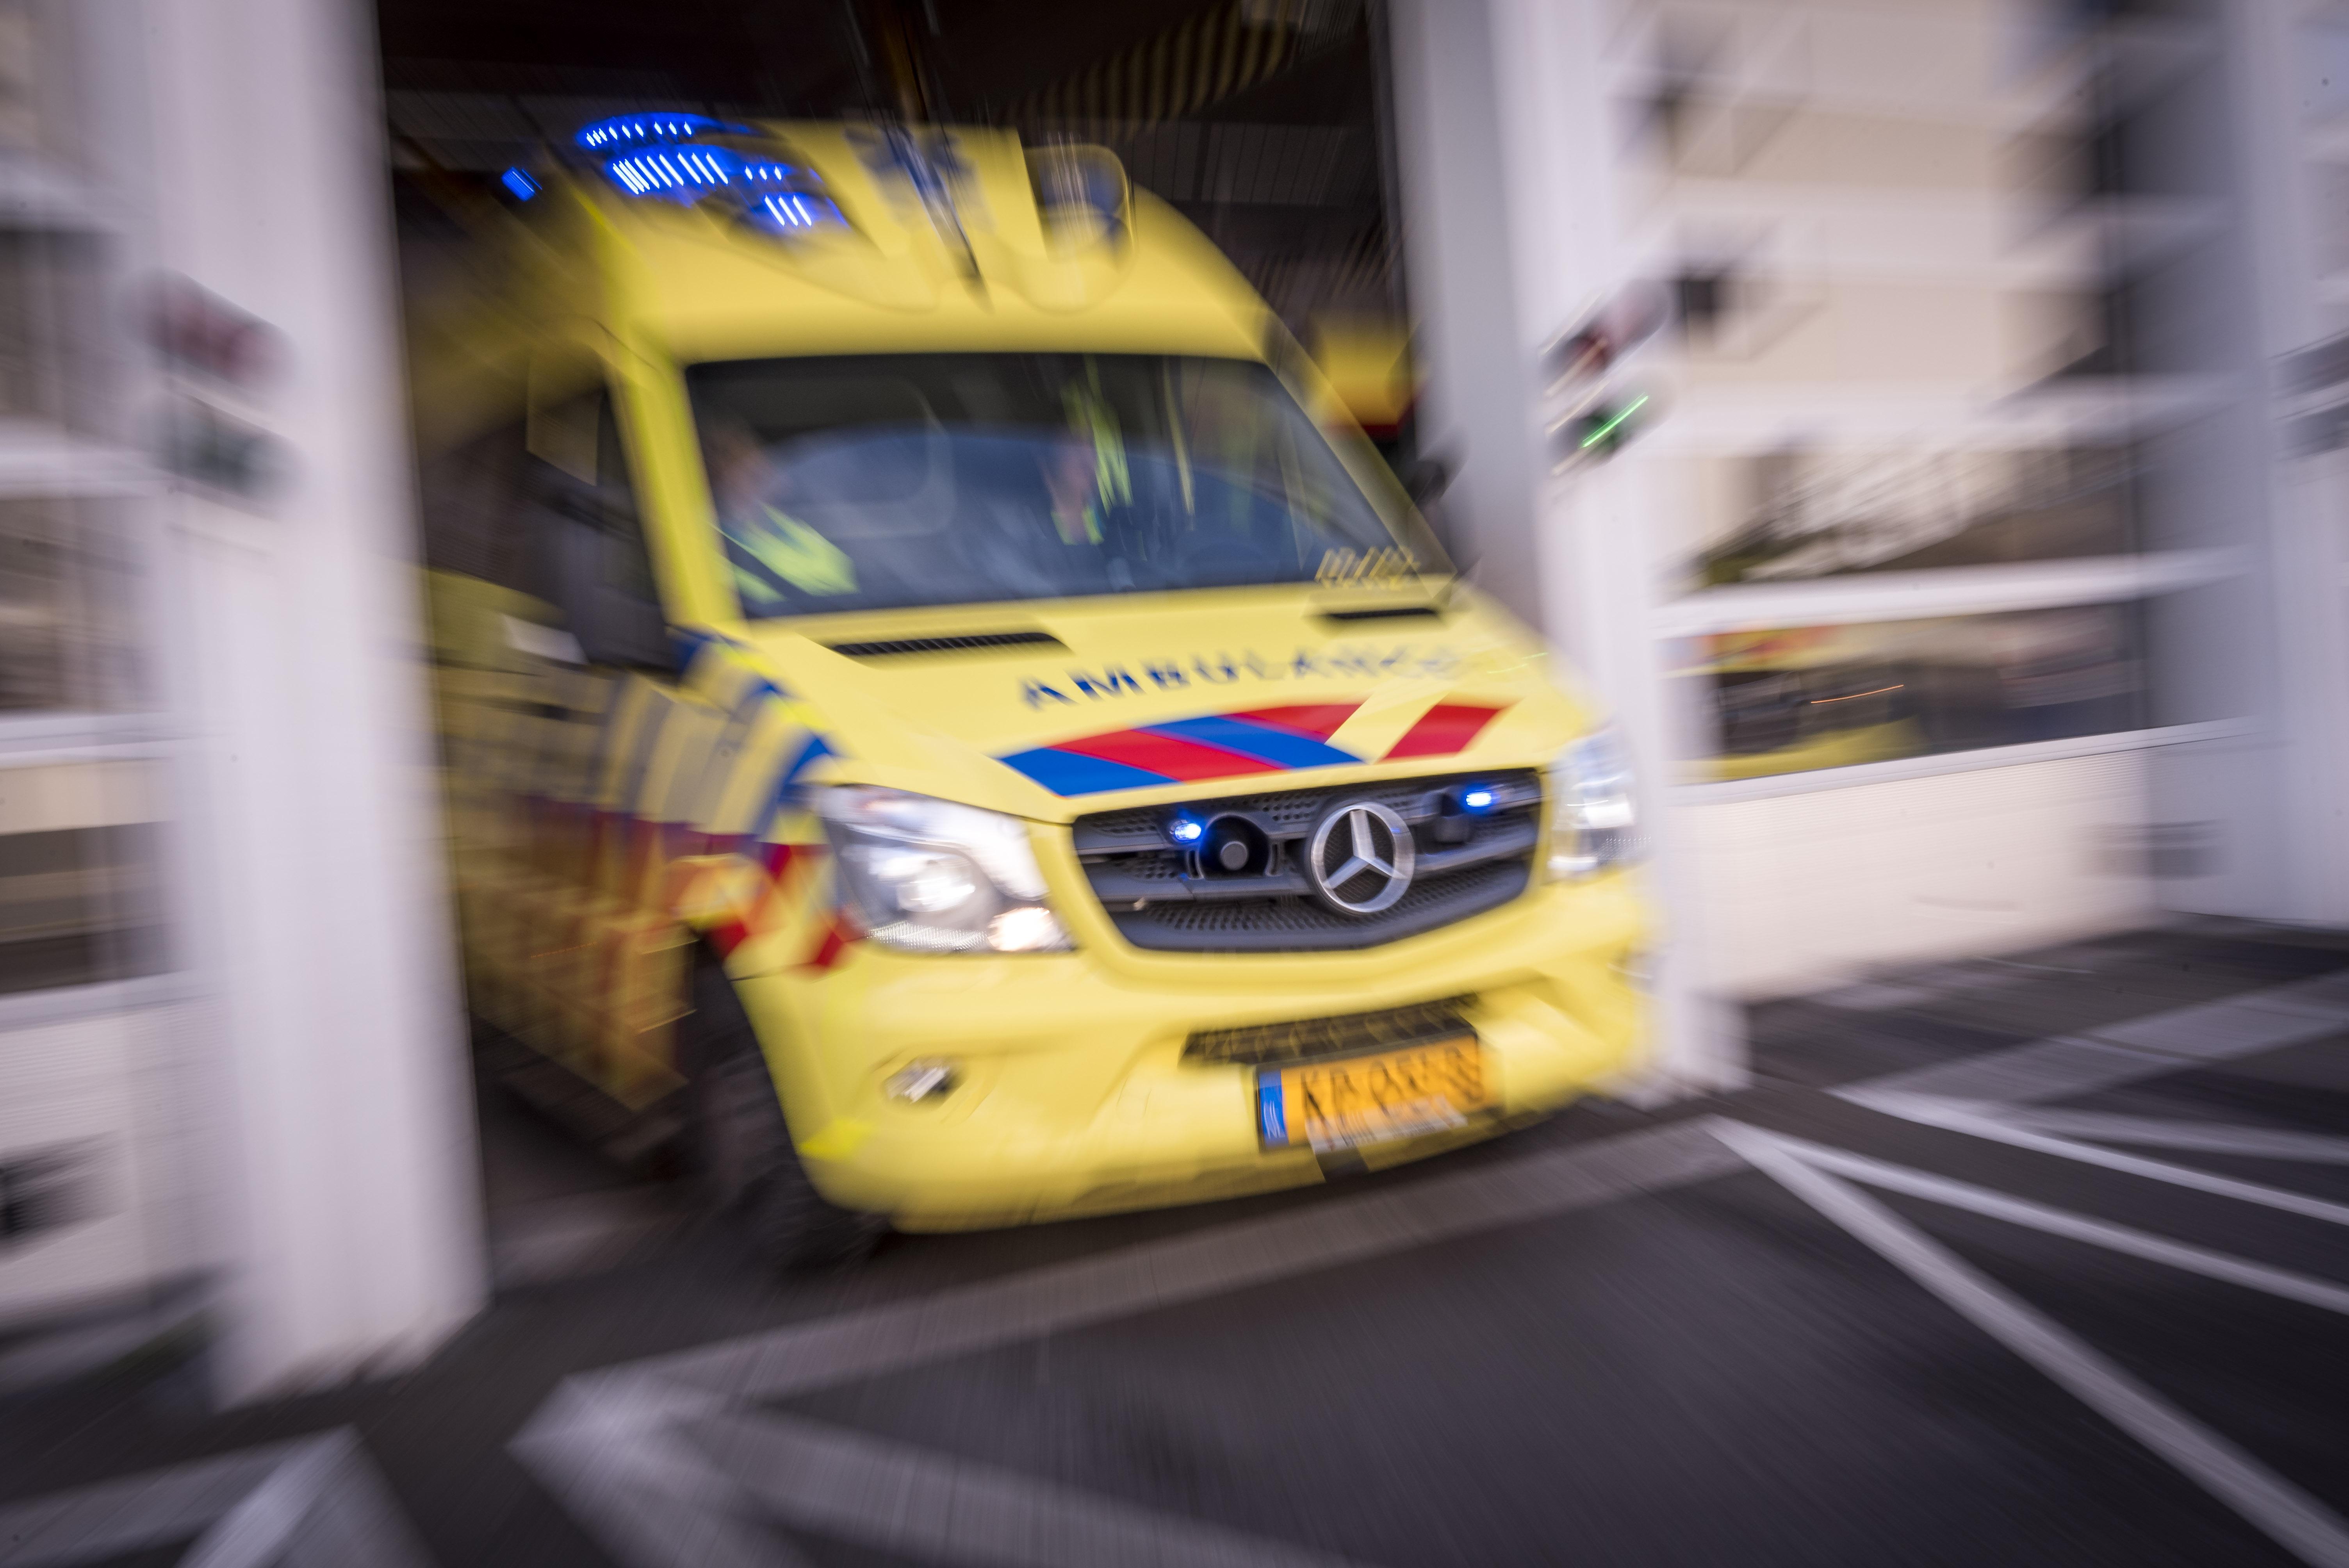 Ambulance naar de Magneet in Purmerend vanwege ongeval met letsel